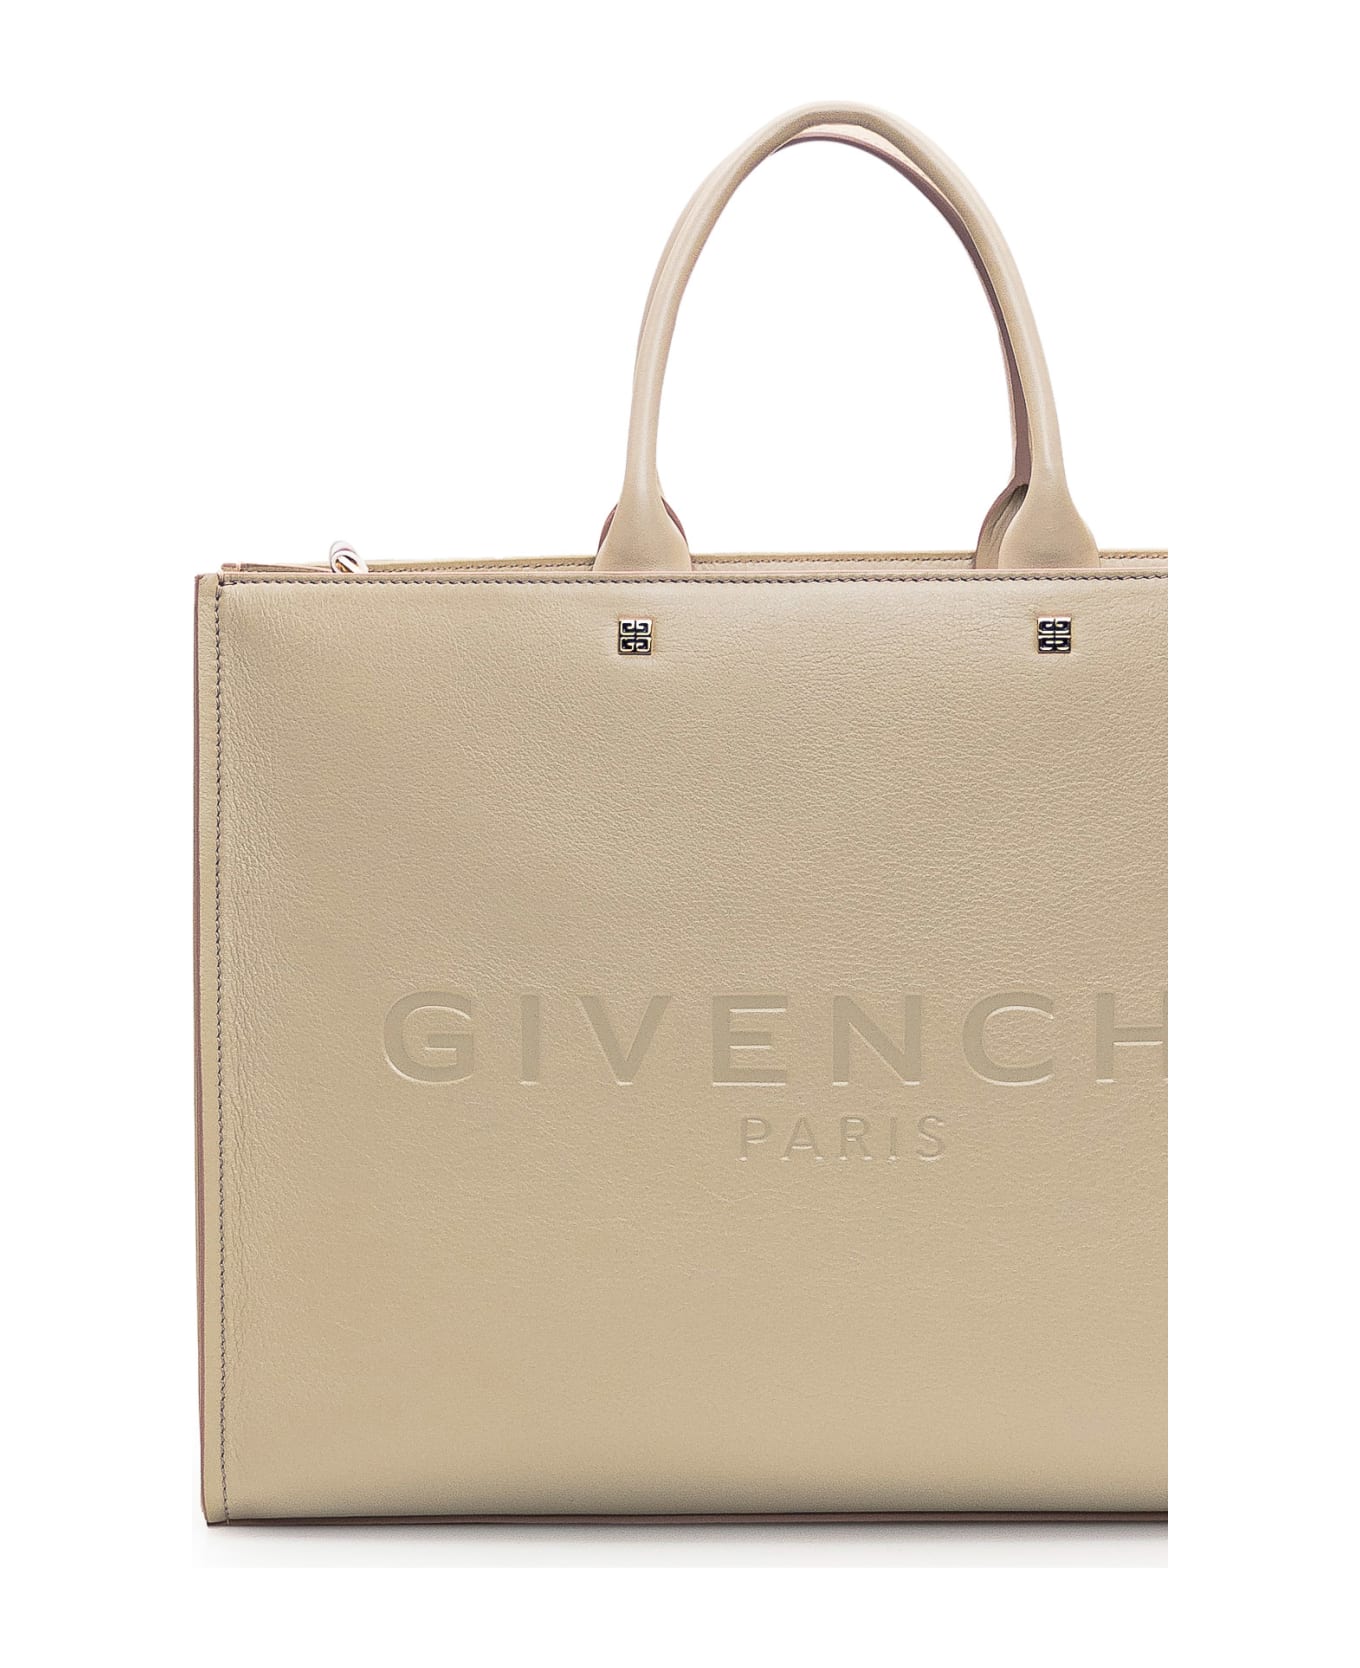 Givenchy G-tote Bag - NATURAL BEIGE